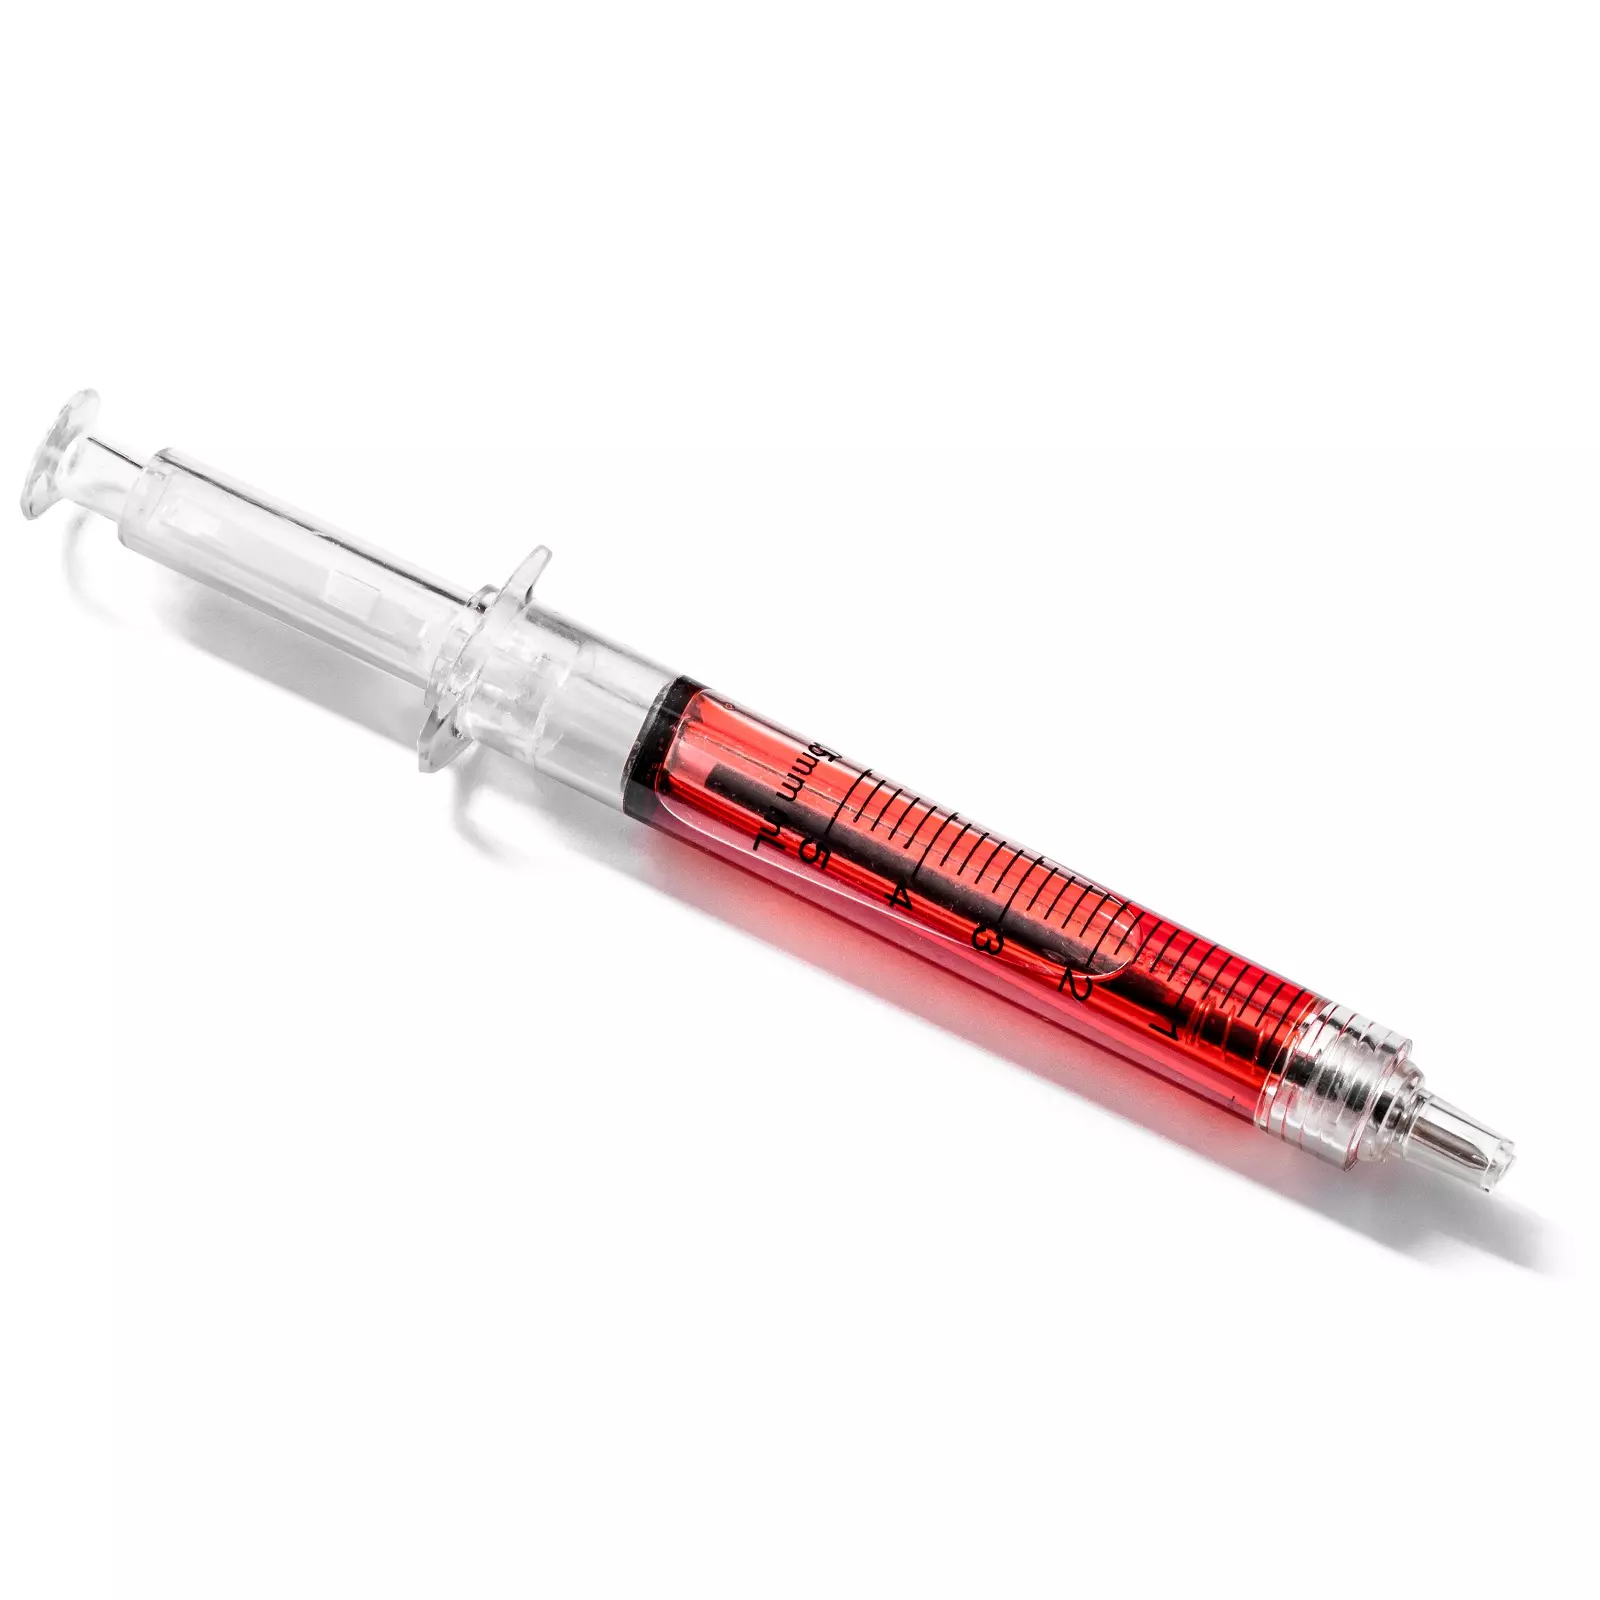 Injekciós tű toll